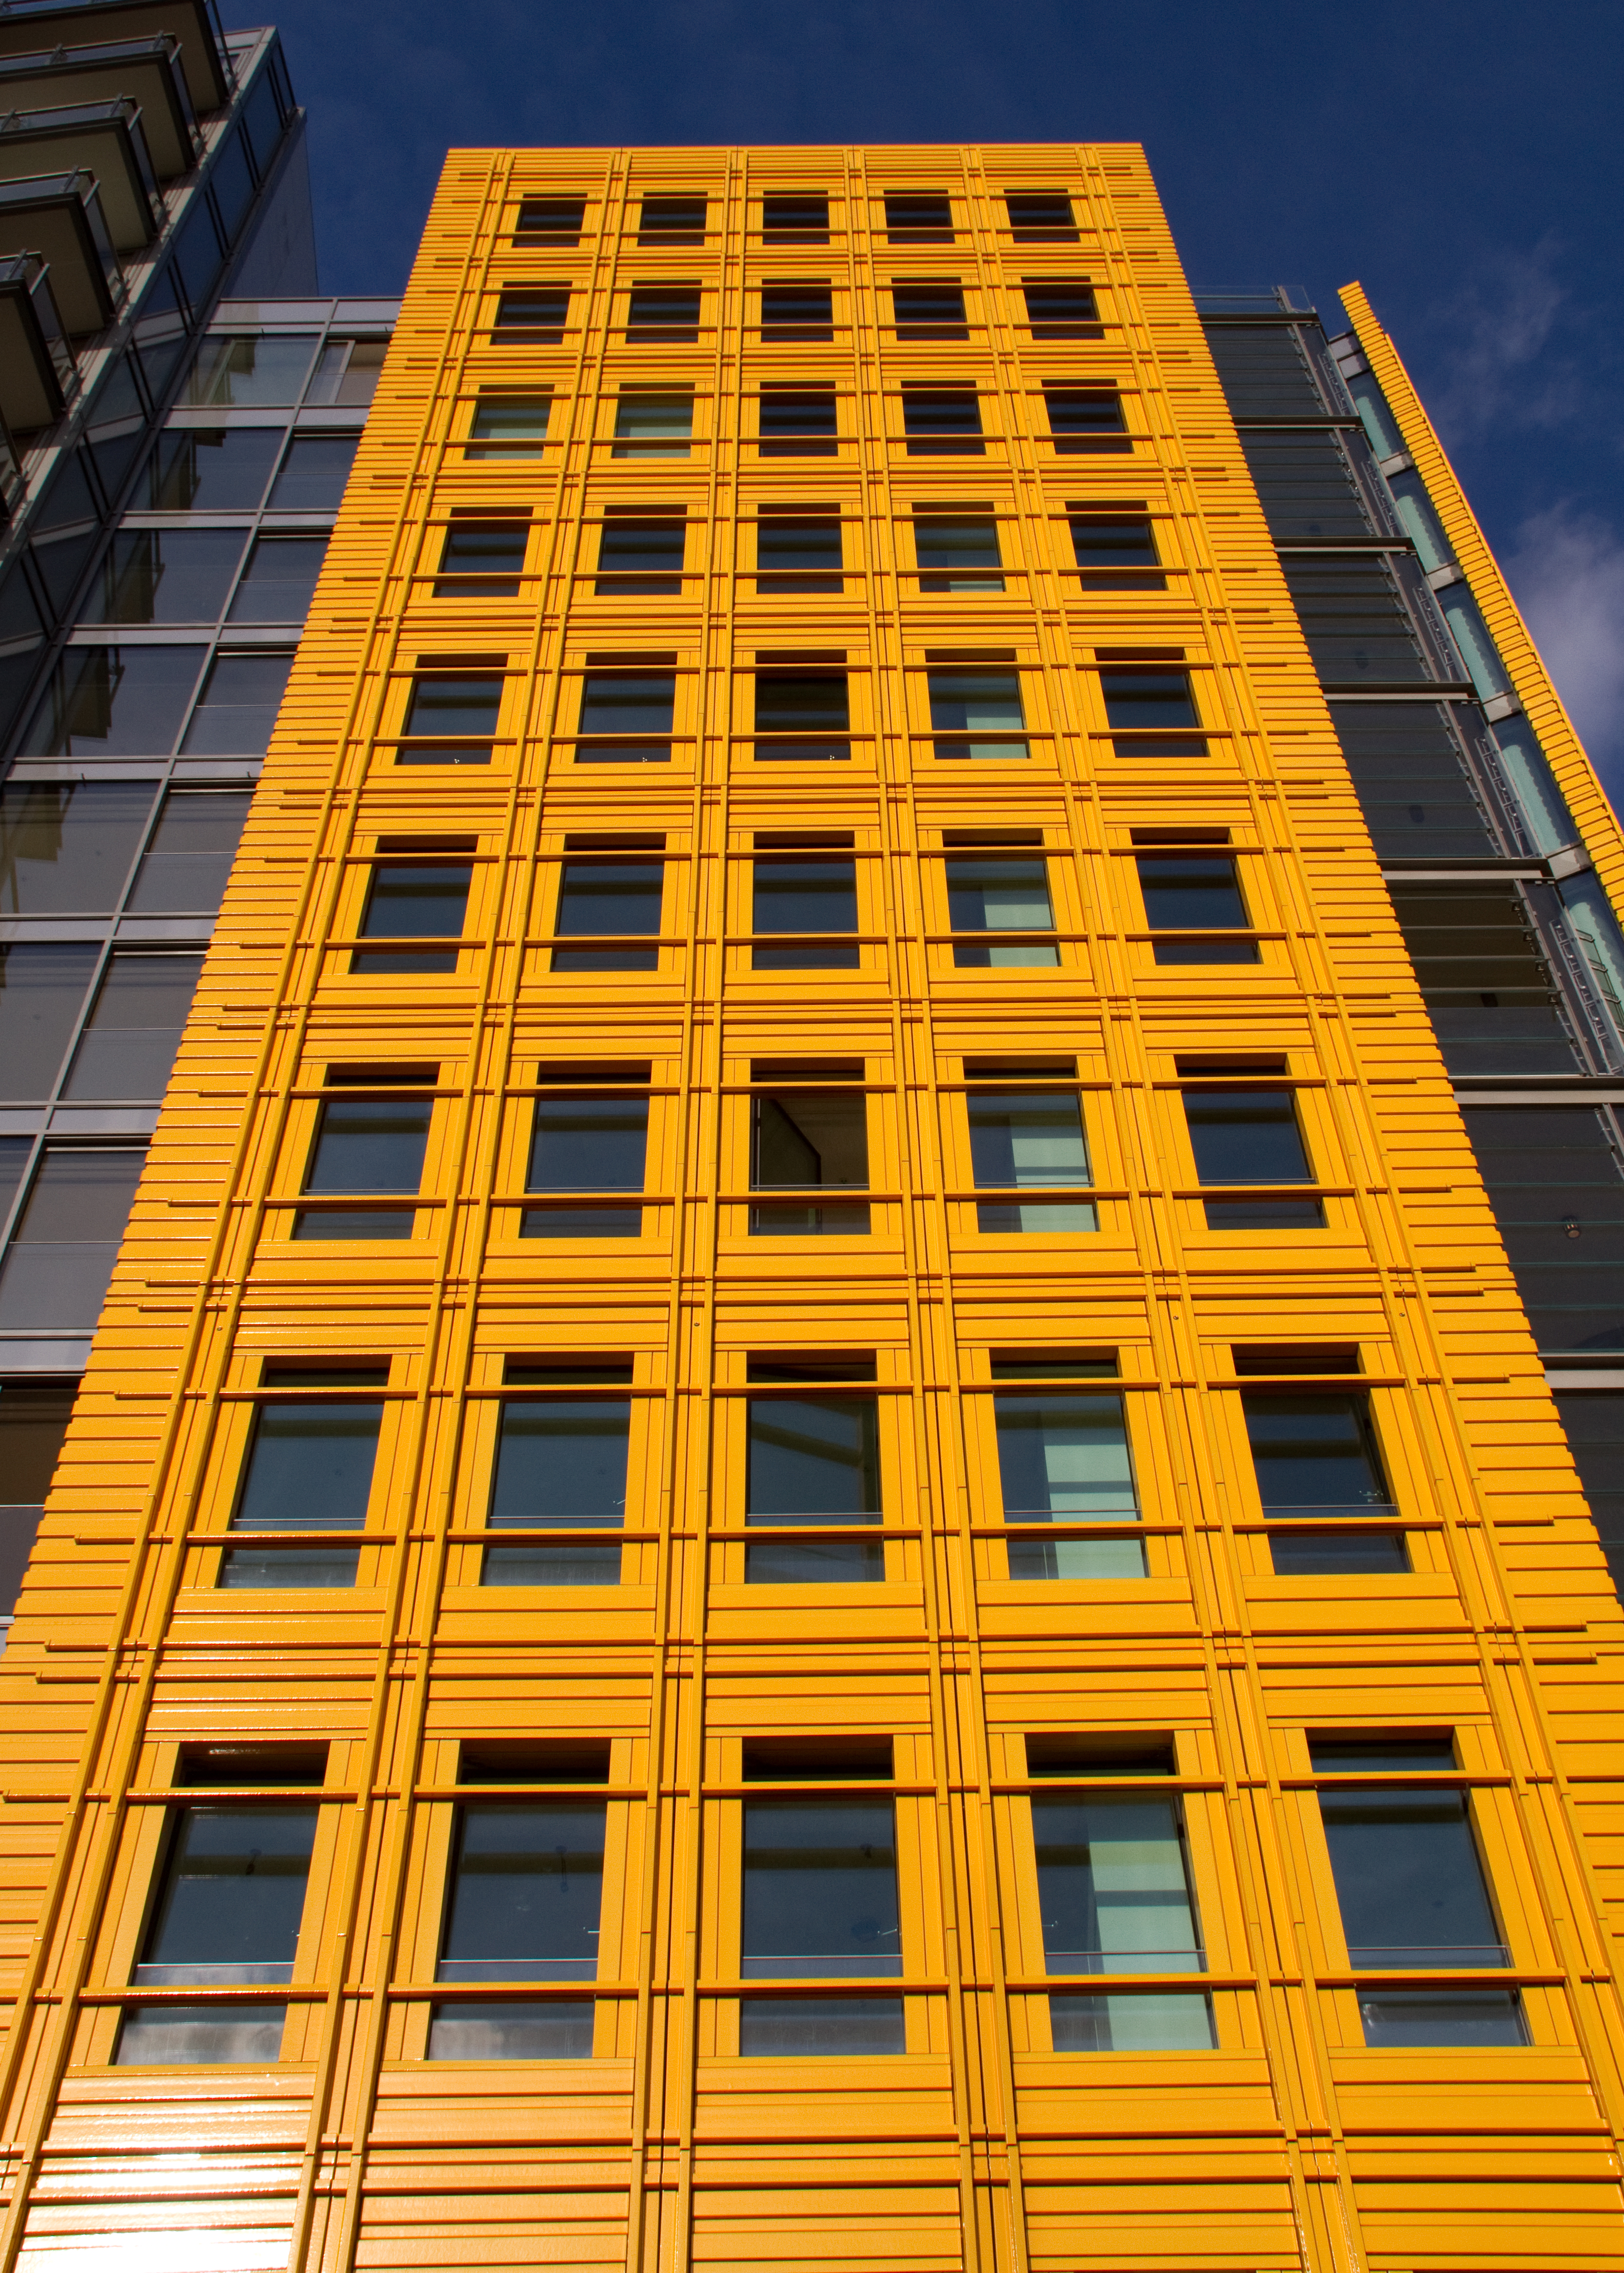 File:Yellow Building 2 (6086739232).jpg - Wikimedia Commons